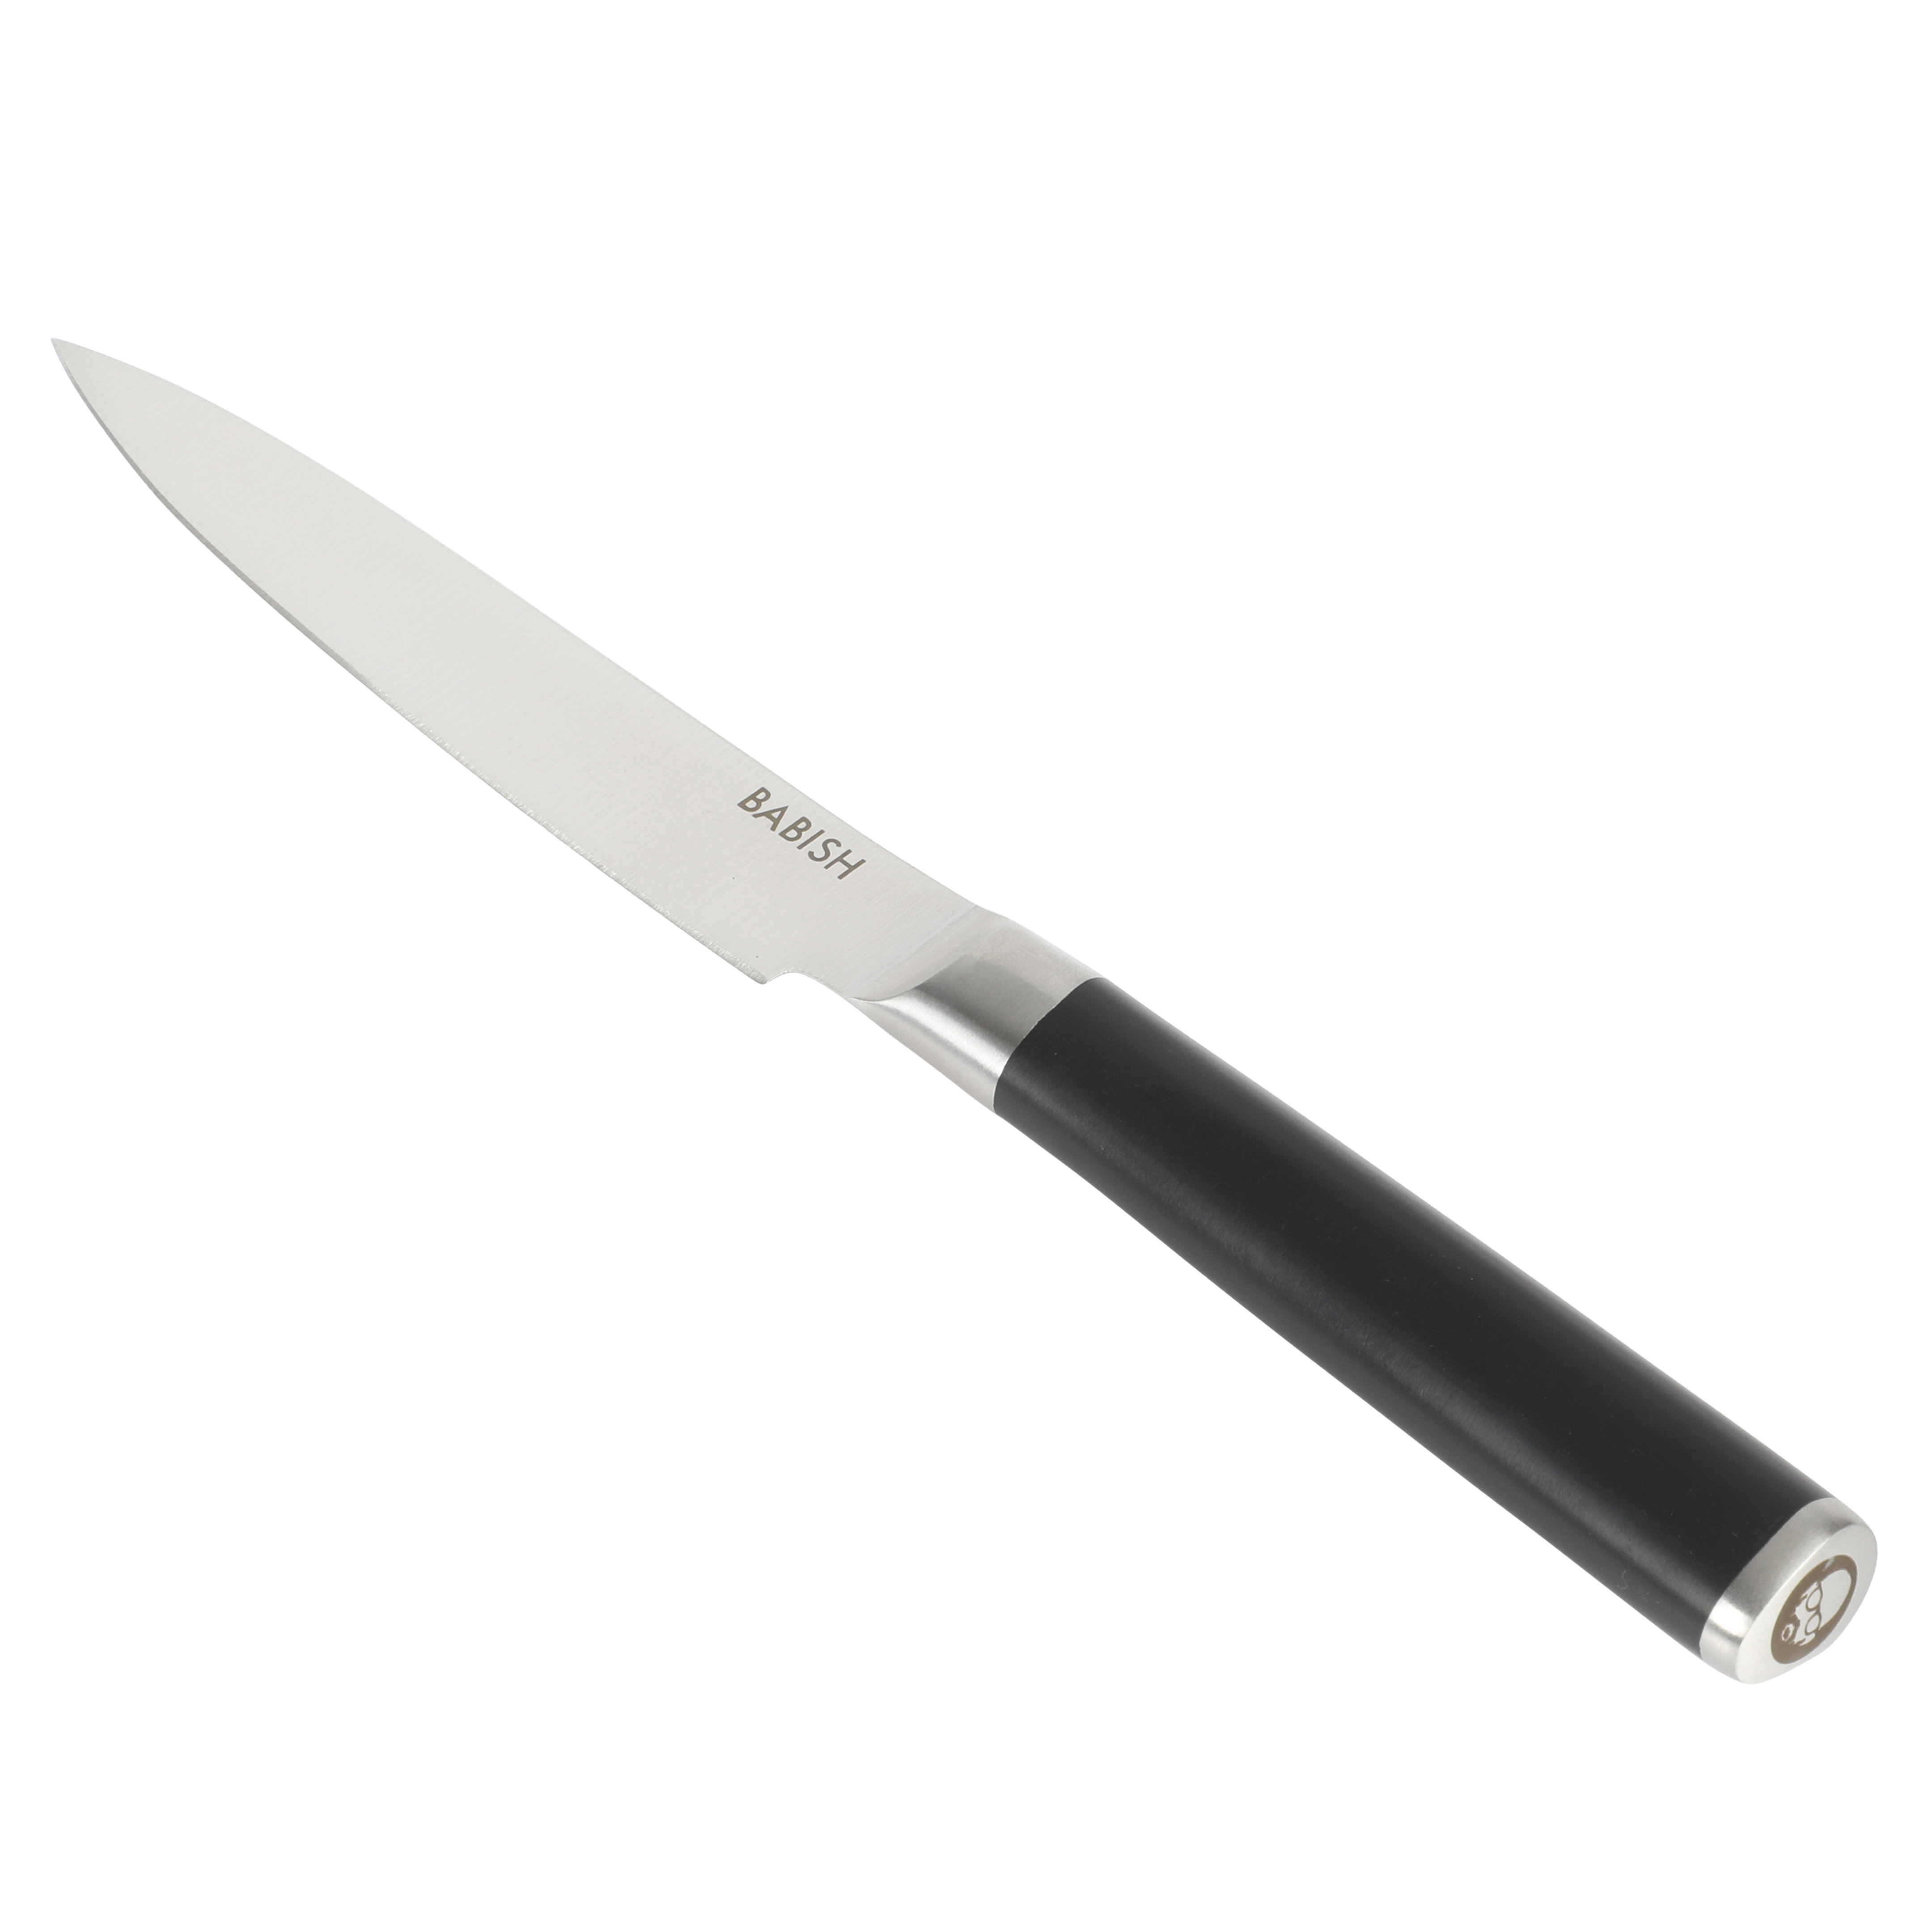 Babish 5'' Utility Knife 138196.01R